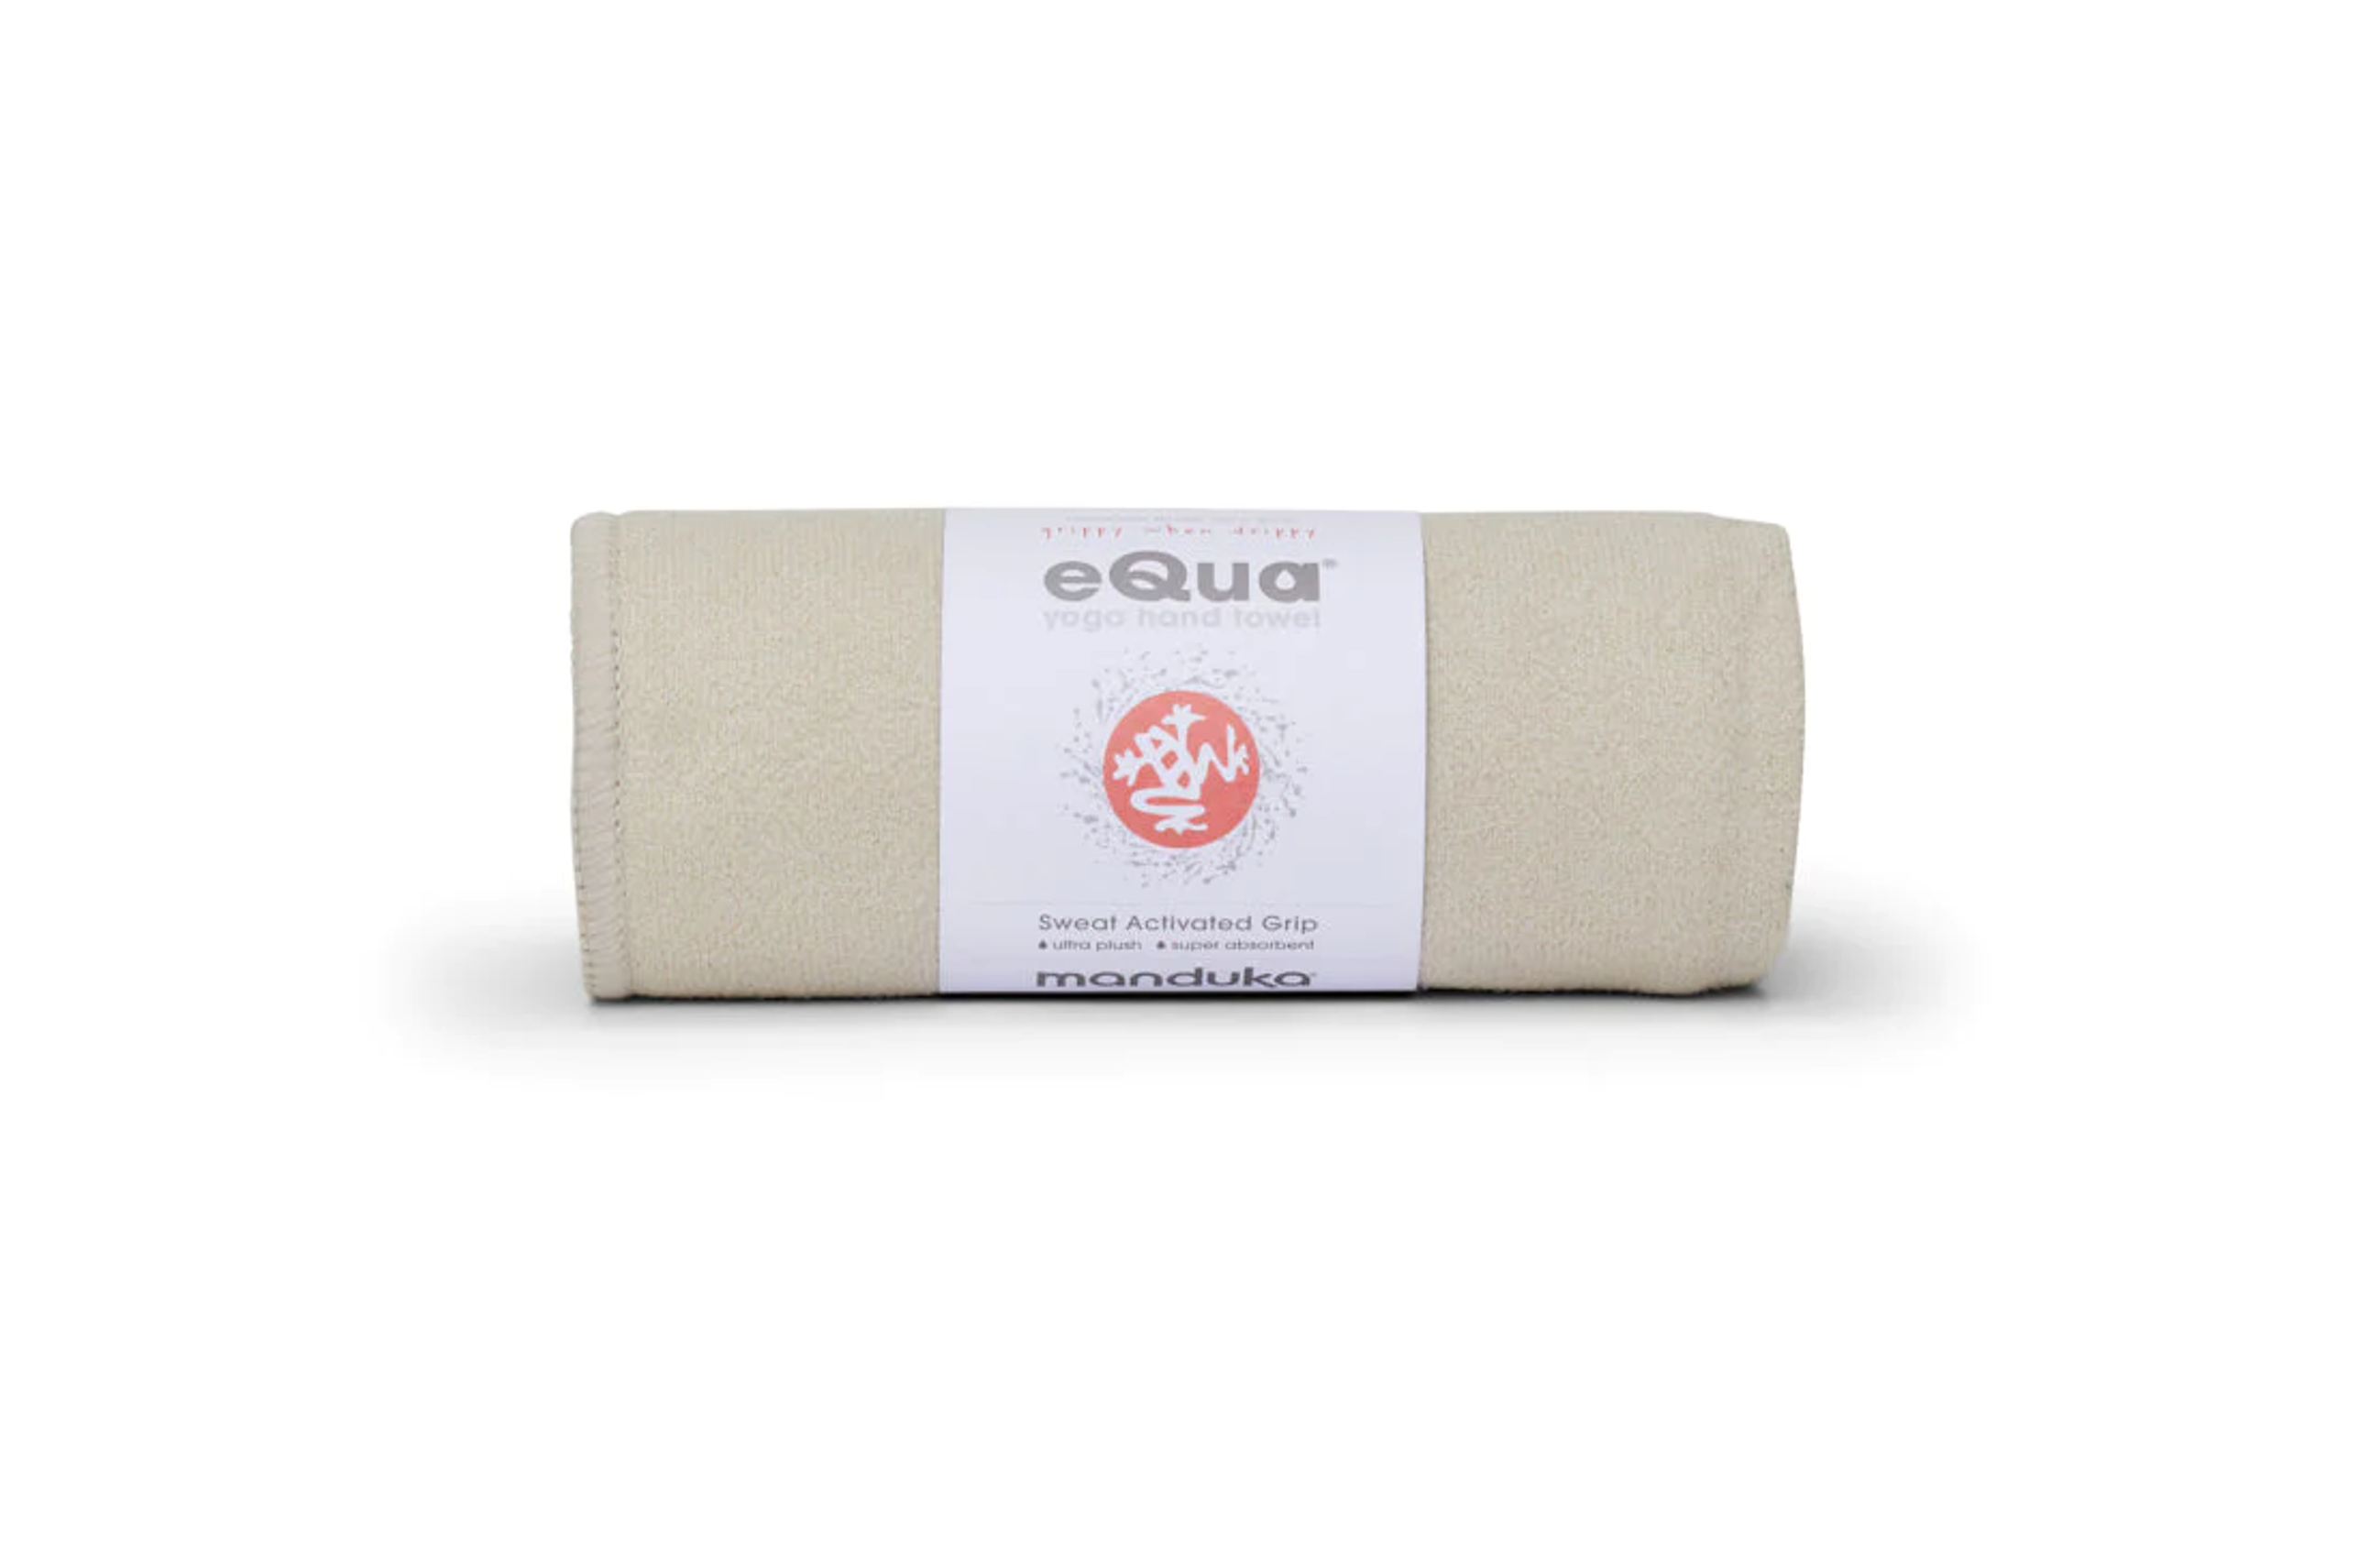 MANDUKA eQua® Hand Yoga Towel - Sage Green 